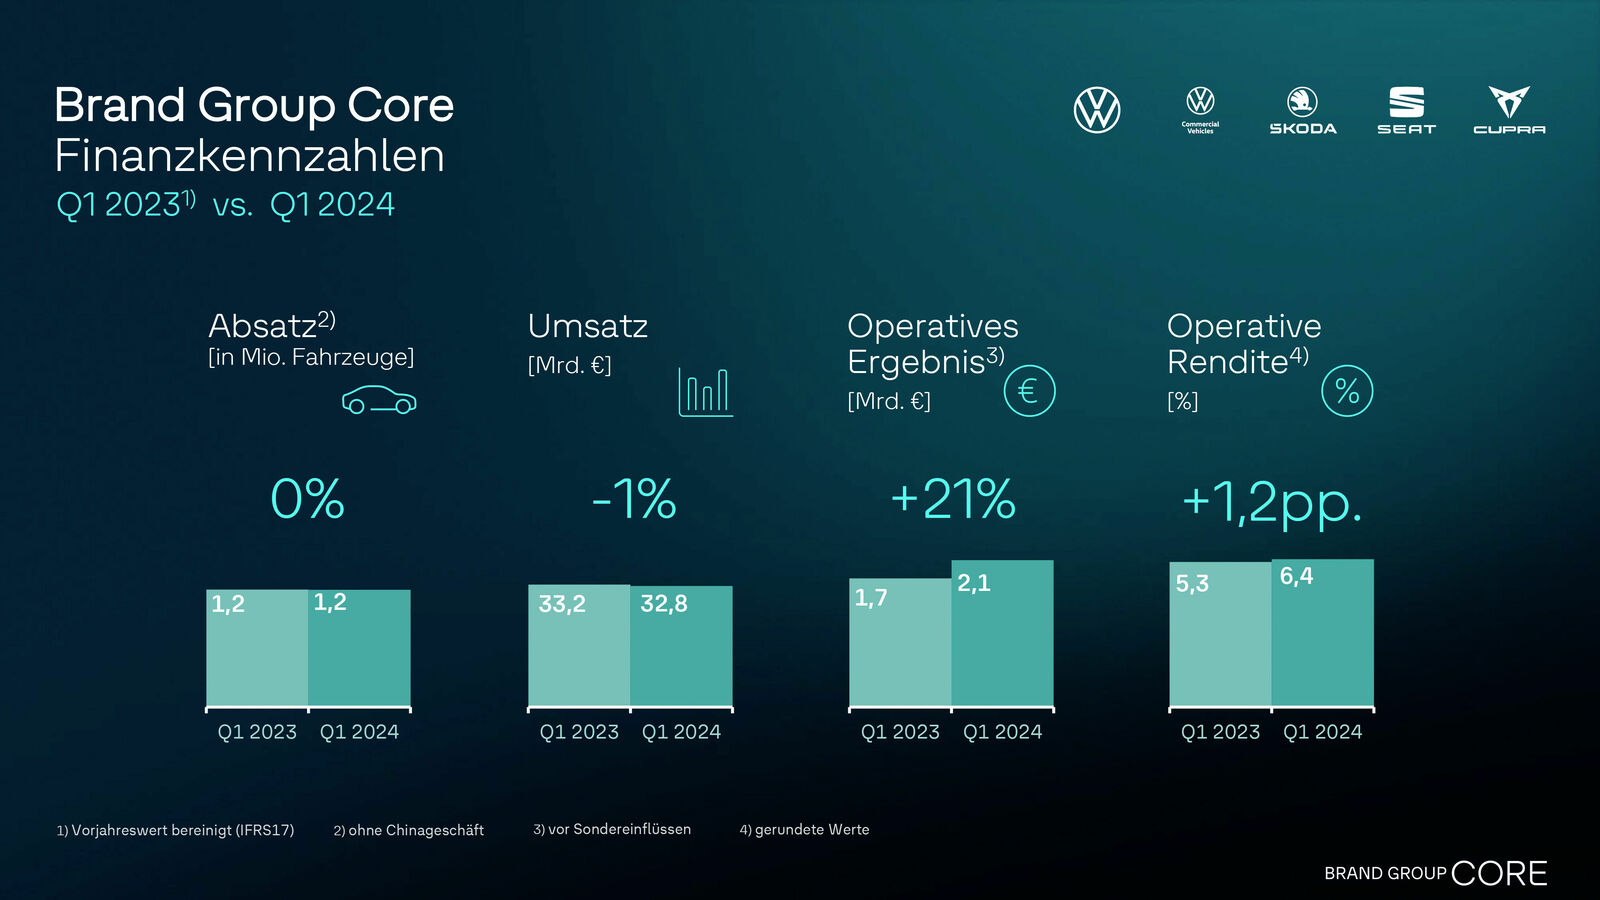 Markengruppe Core steigert trotz herausforderndem Marktumfeld operatives Ergebnis im ersten Quartal 2024